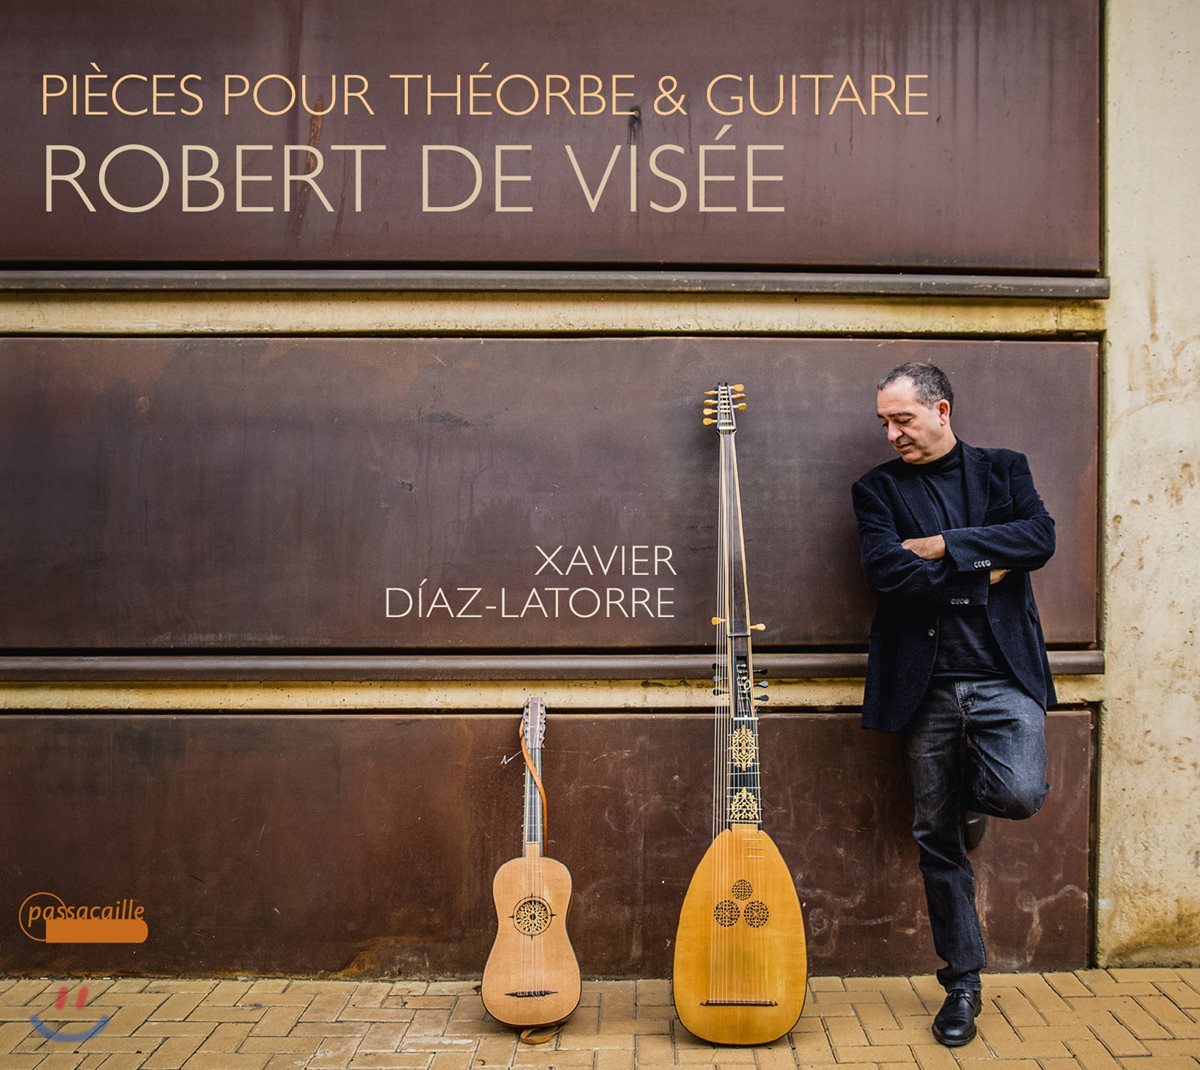 Xavier Diaz-Latorre 로베르 드 비제: 테오르보와 기타를 위한 여섯 곡의 모음곡 (Robert de Visee: Pieces for Theorbo &amp; Guitar) 